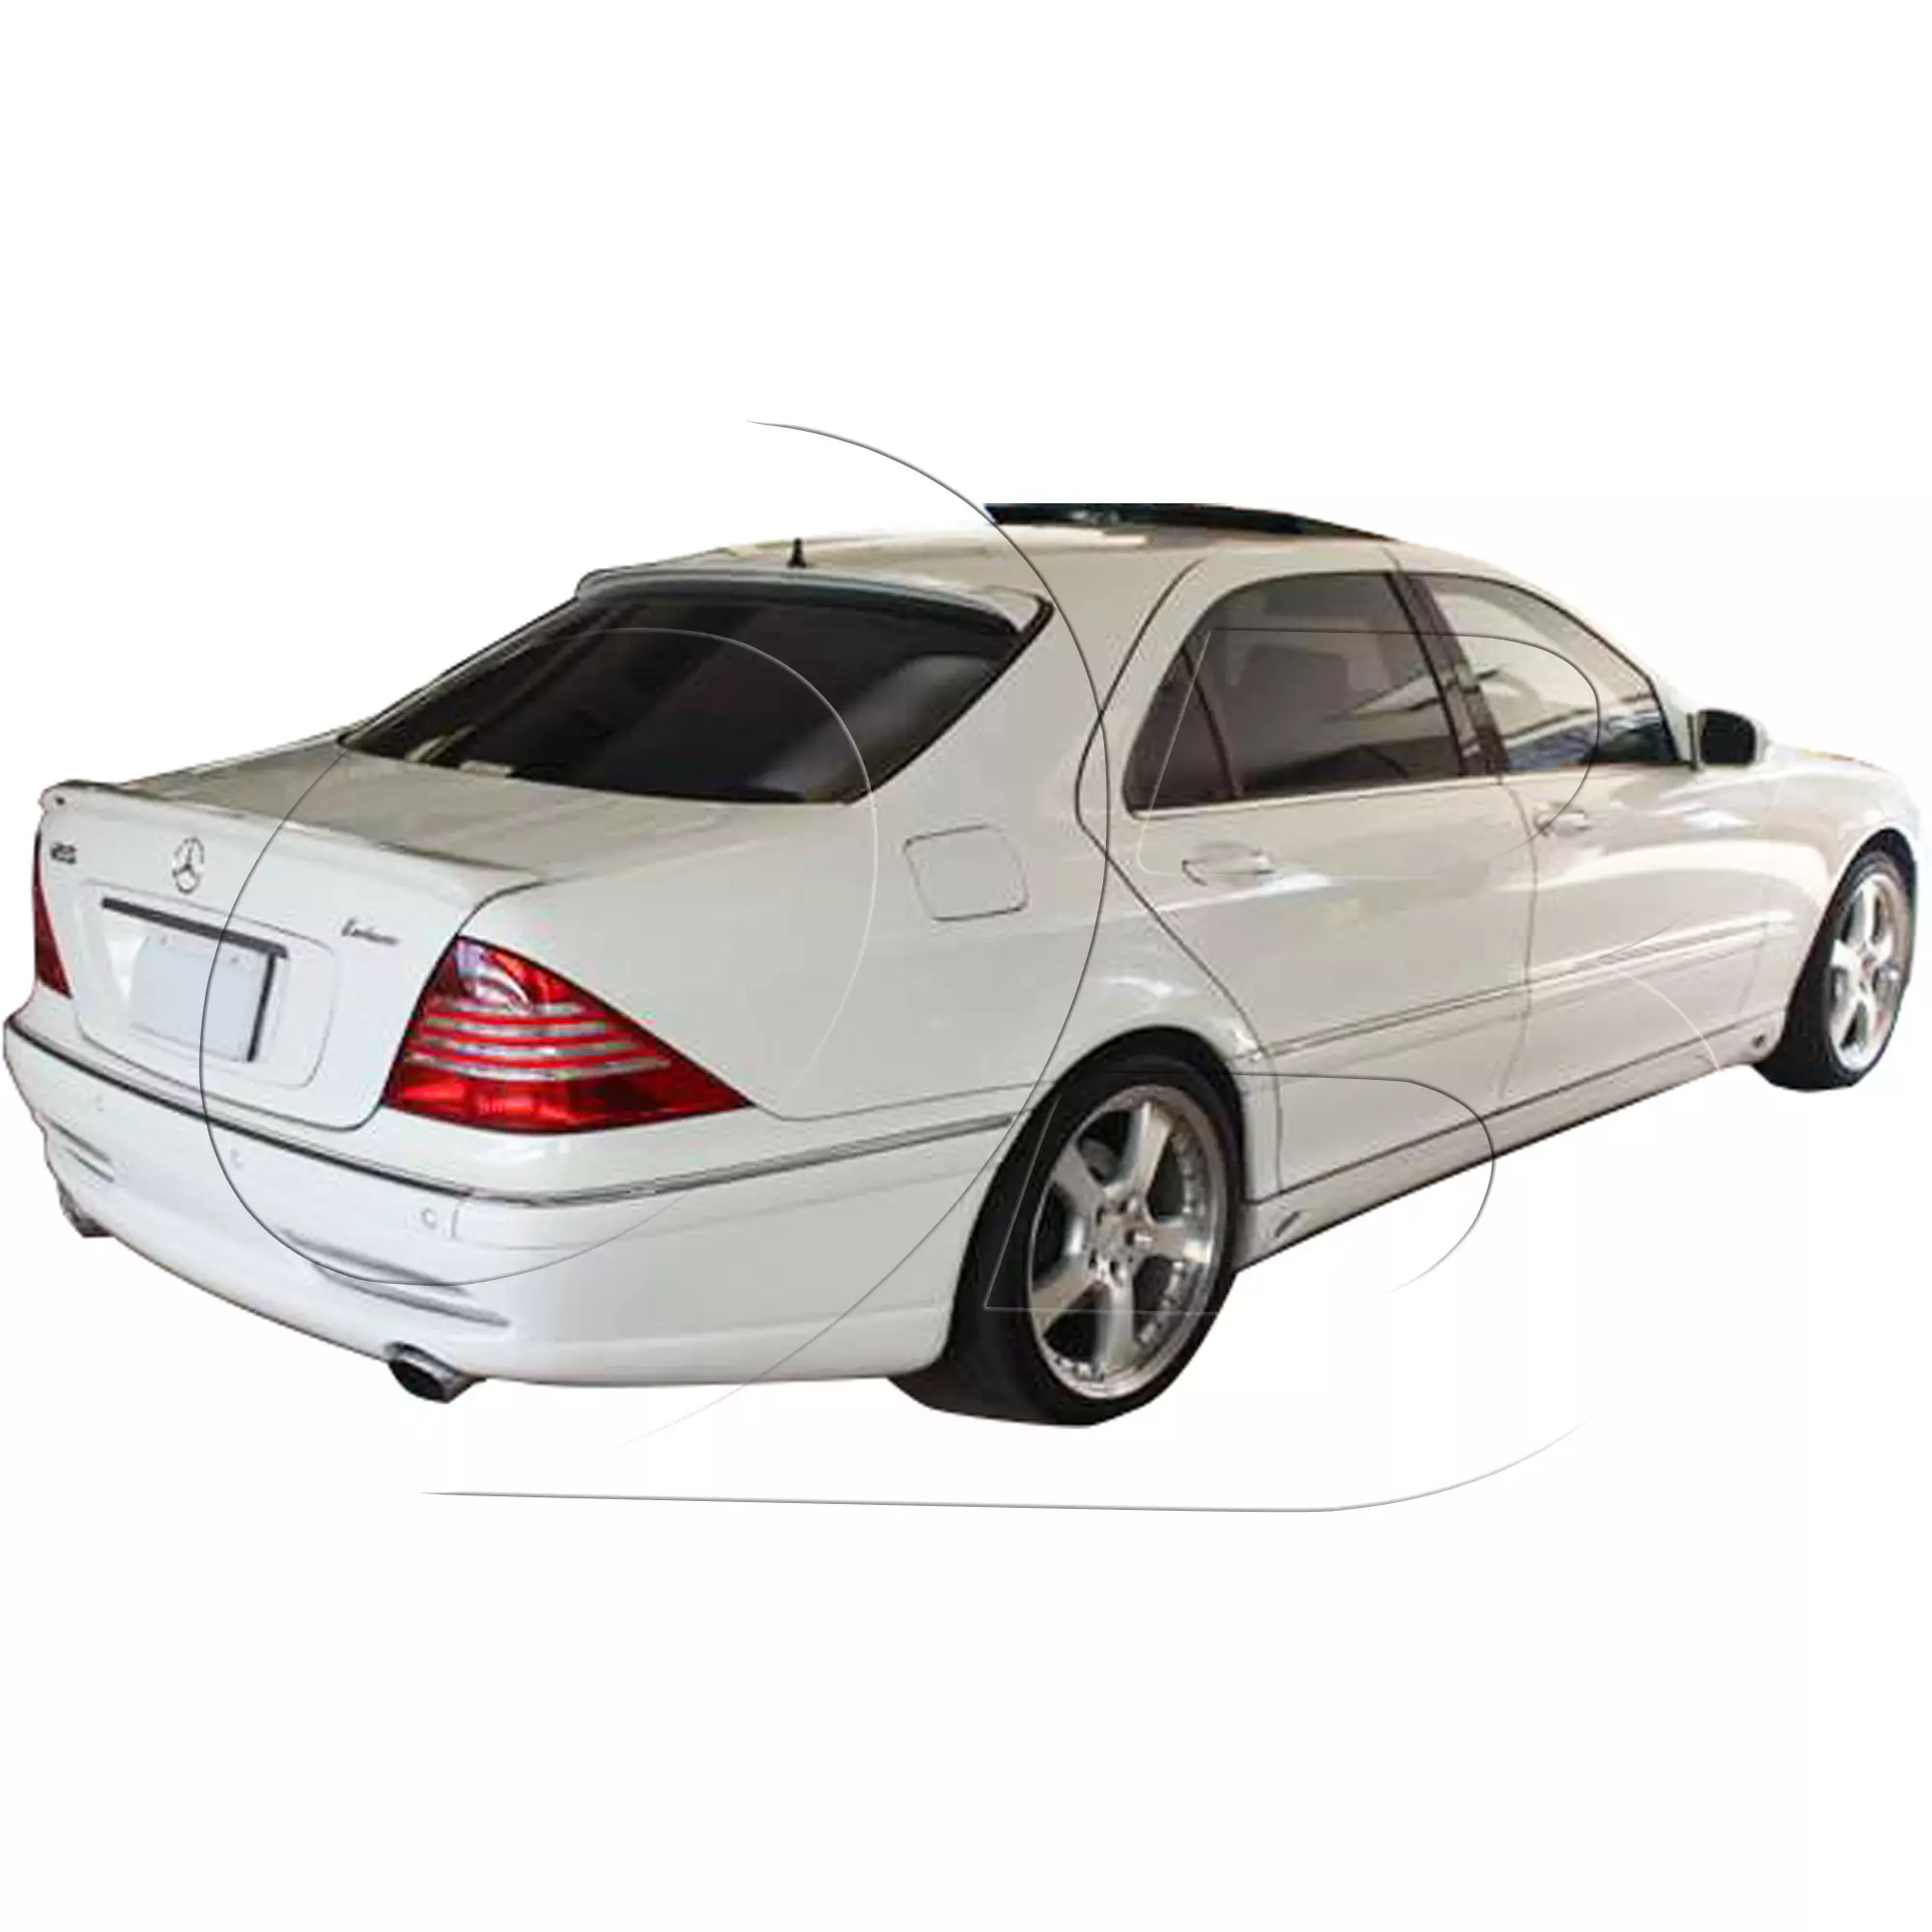 KBD Urethane LRS Style 1pc Rear Bumper > Mercedes S Class 2000-2002 - Image 7